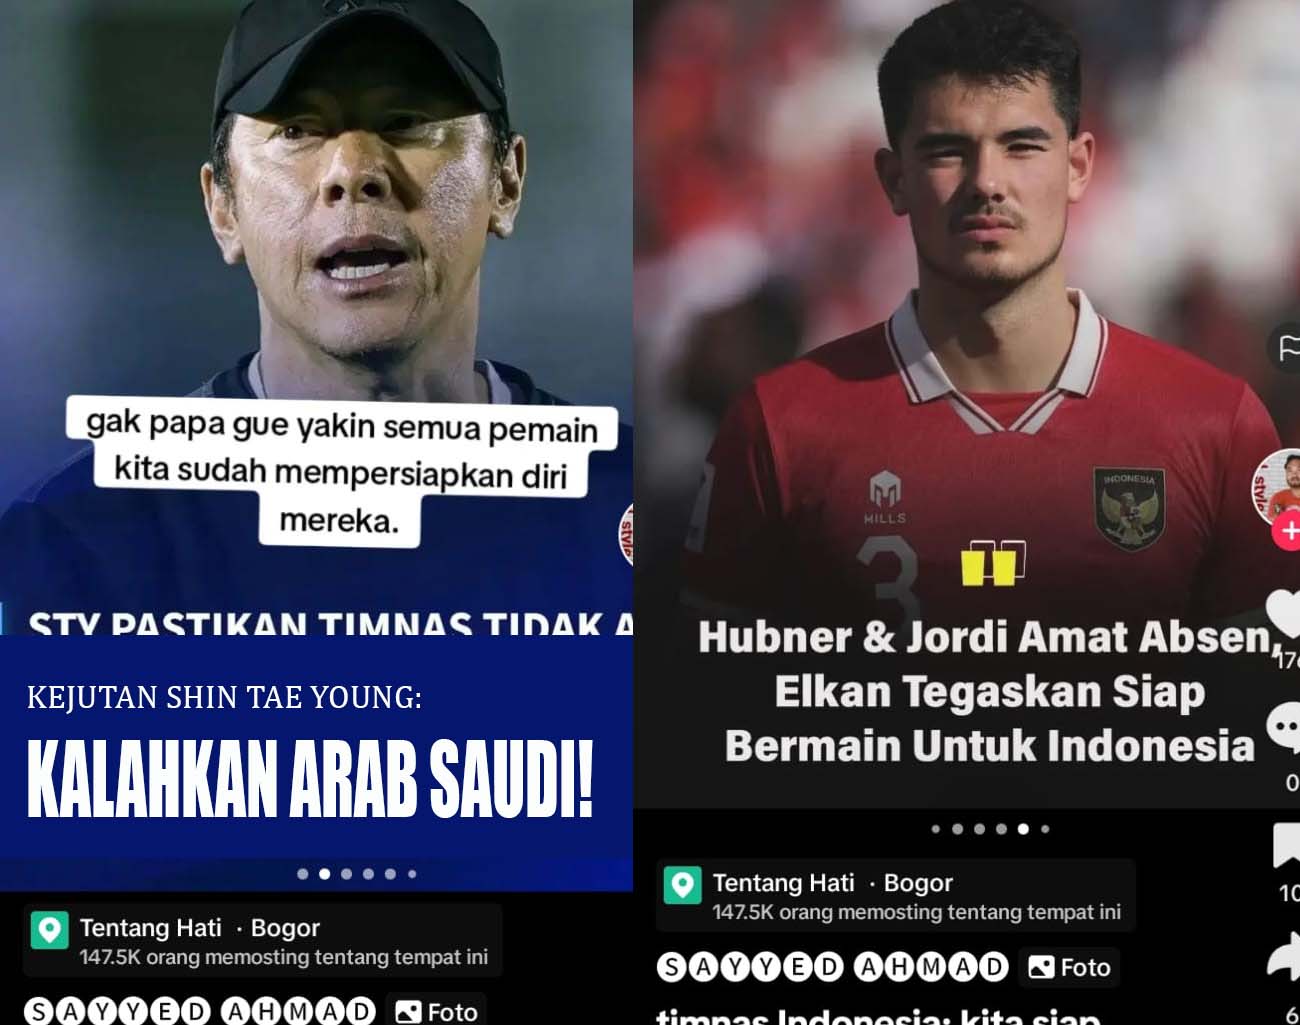 Indonesia Kalahkan Arab Saudi, Perintah STY, Elkan Baggott, Pemain Keturunan, Kualifikasi Piala Dunia 2026